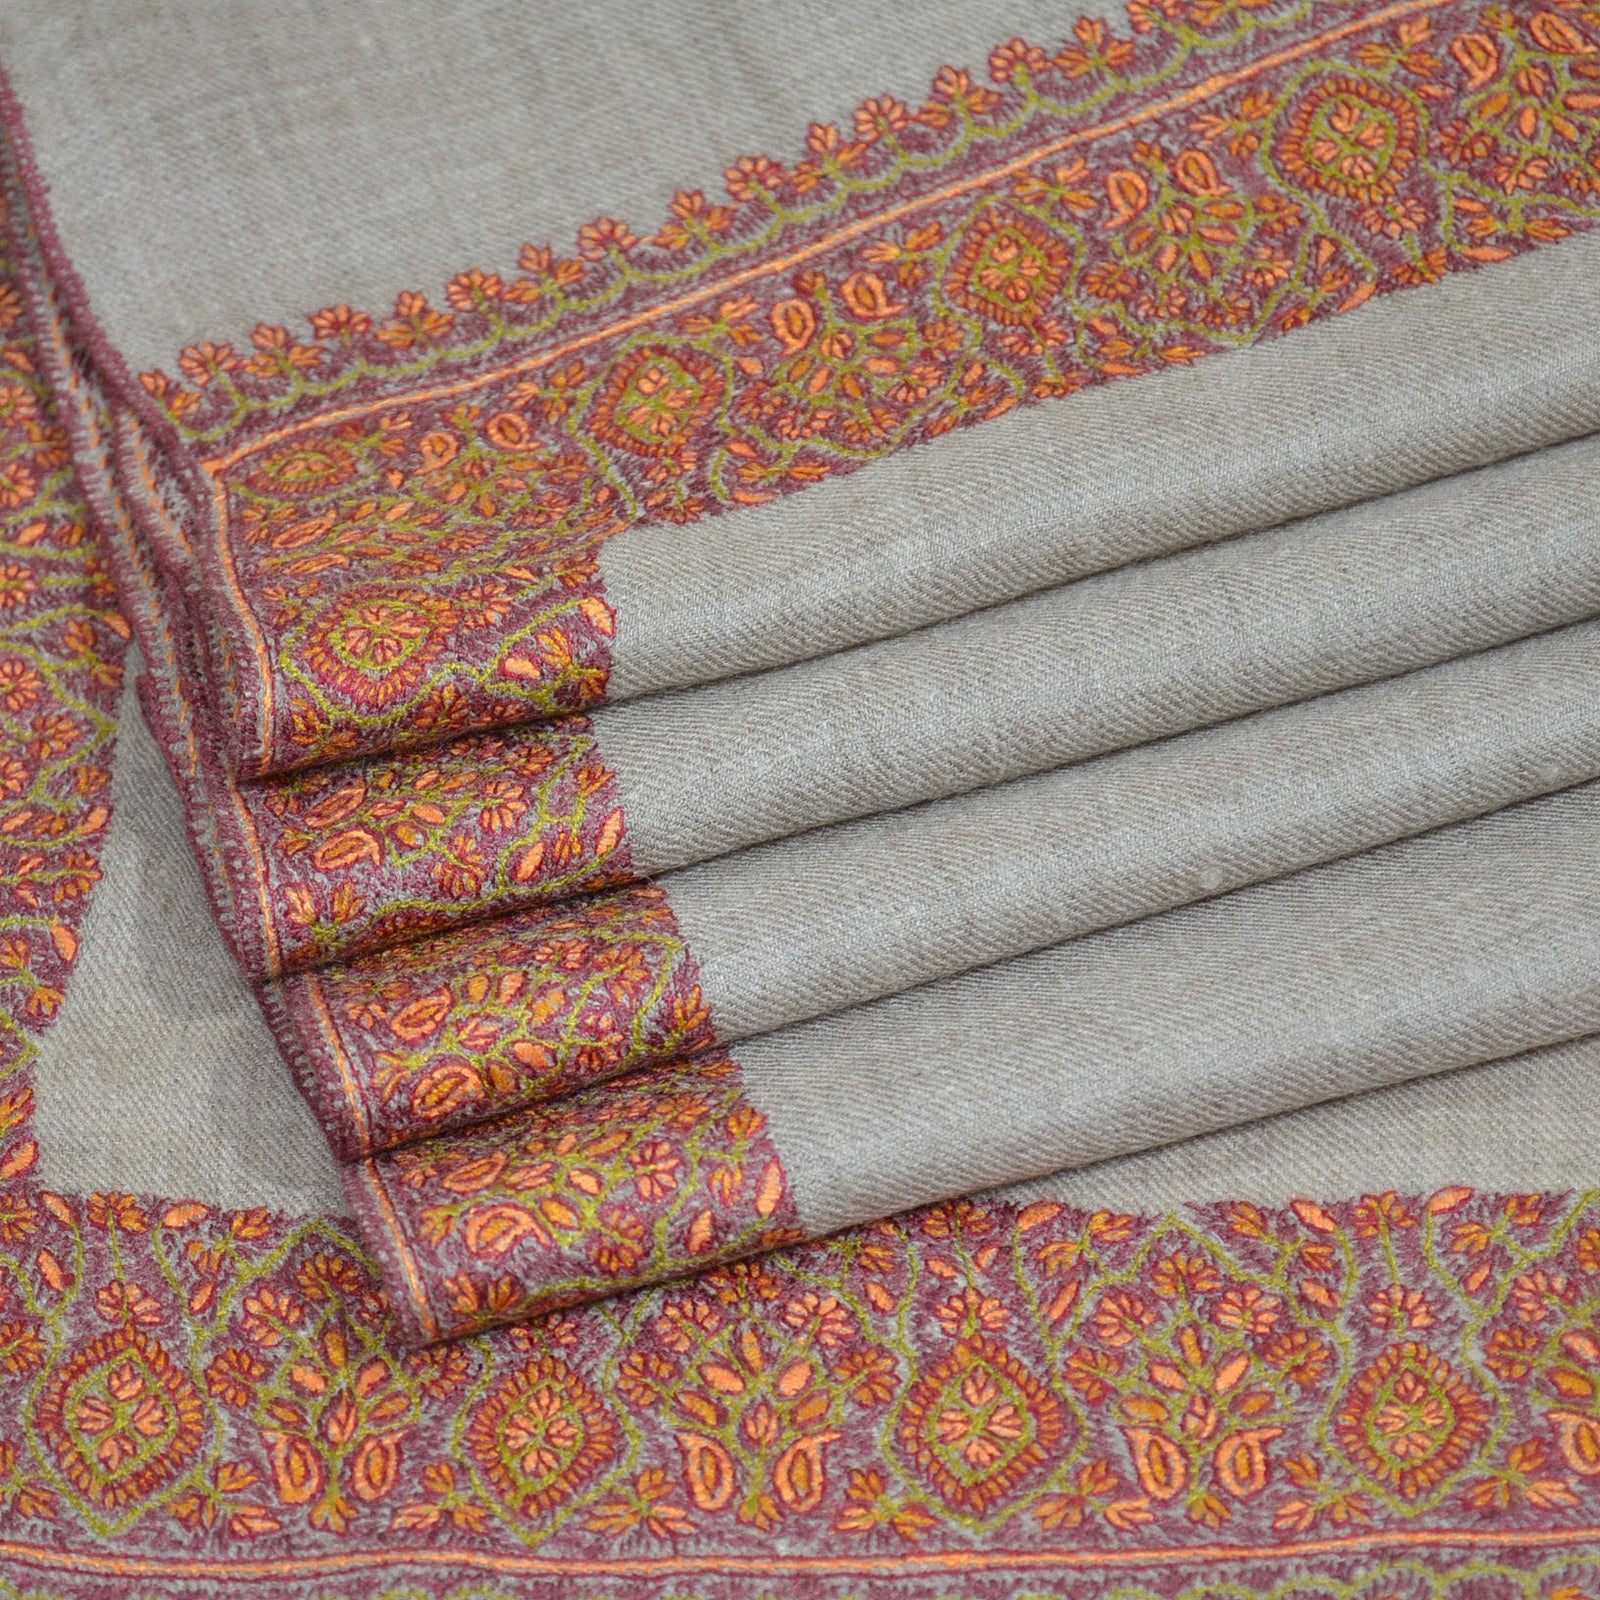 Un Dyed Taupe Sozni Border Embroidery Cashmere Pashmina Shawl